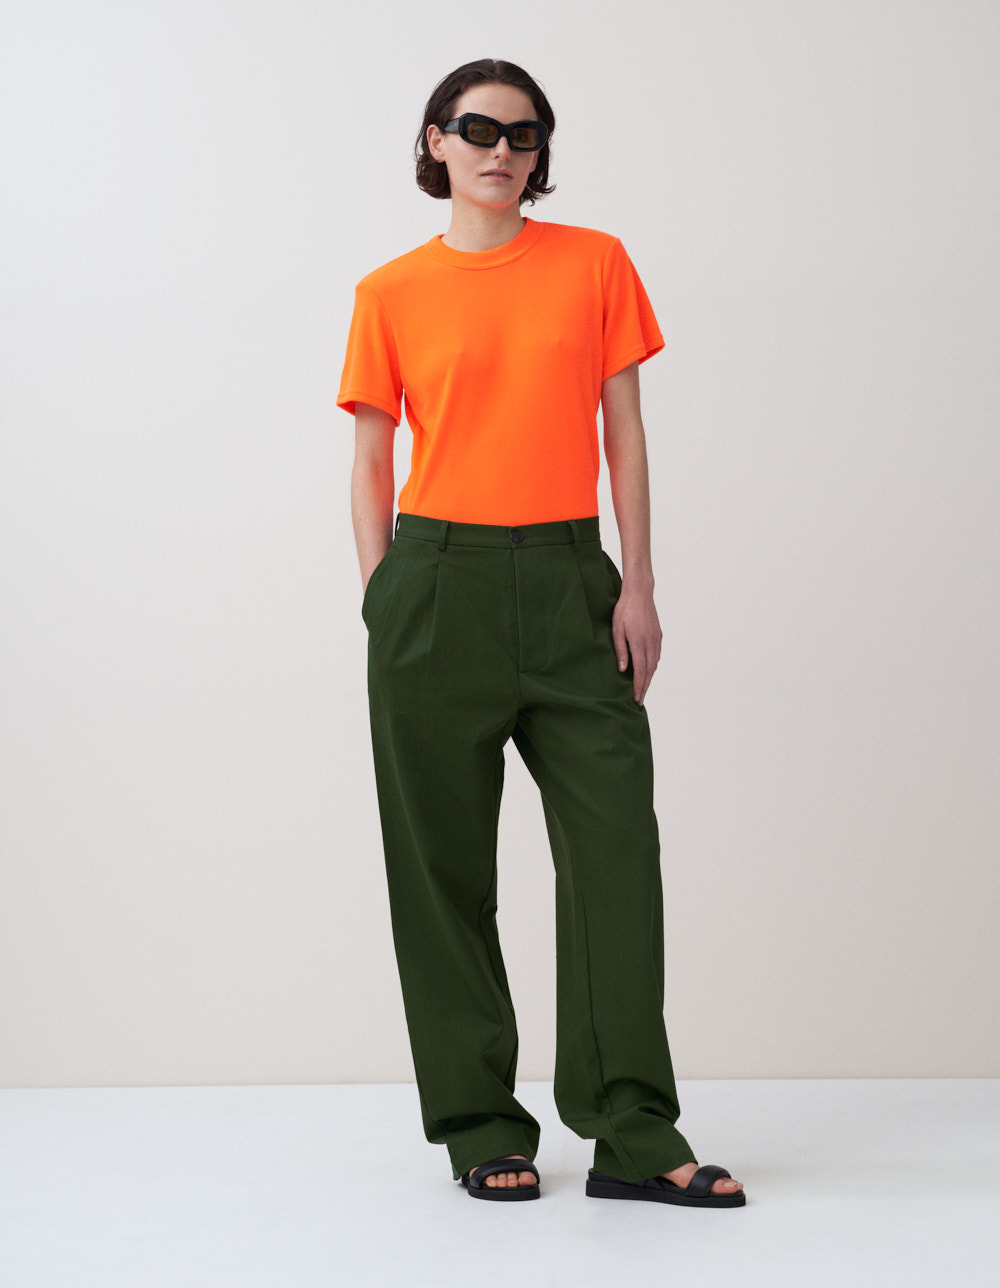 Rika Studios Mia Tee Neon Orange Hooper Pants